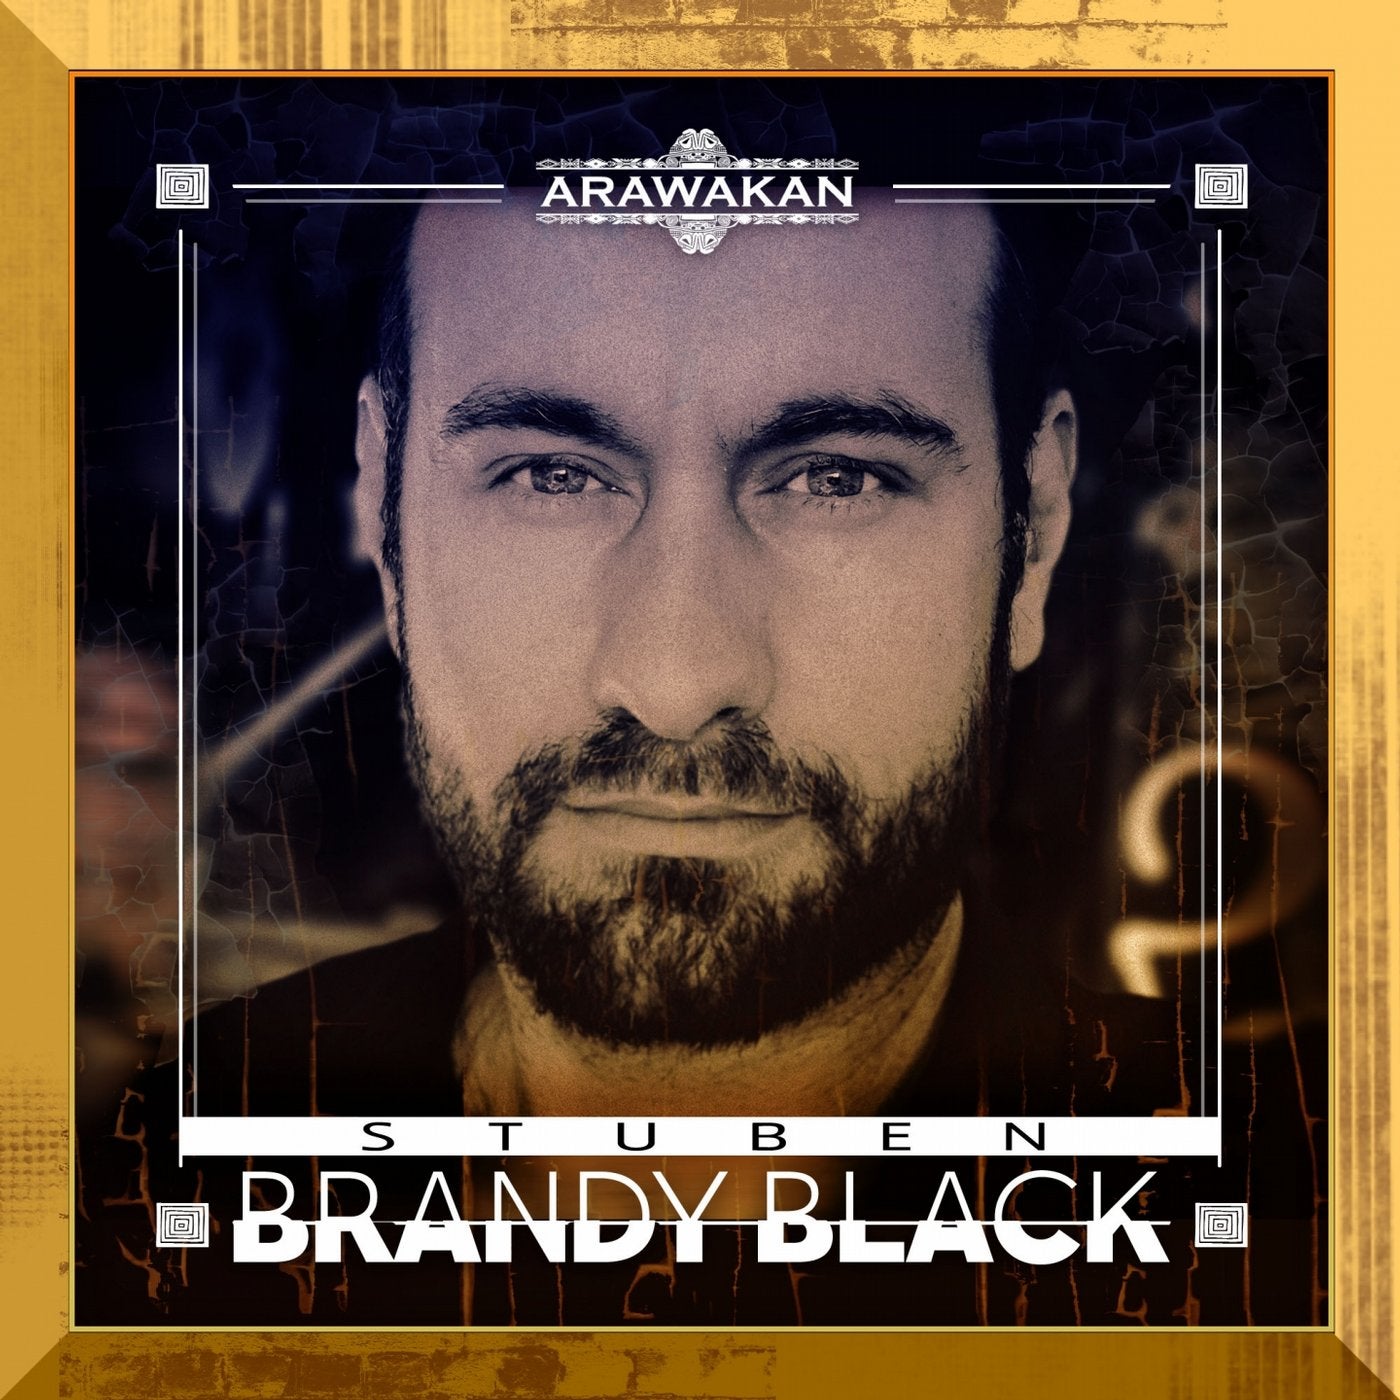 Brandy Black